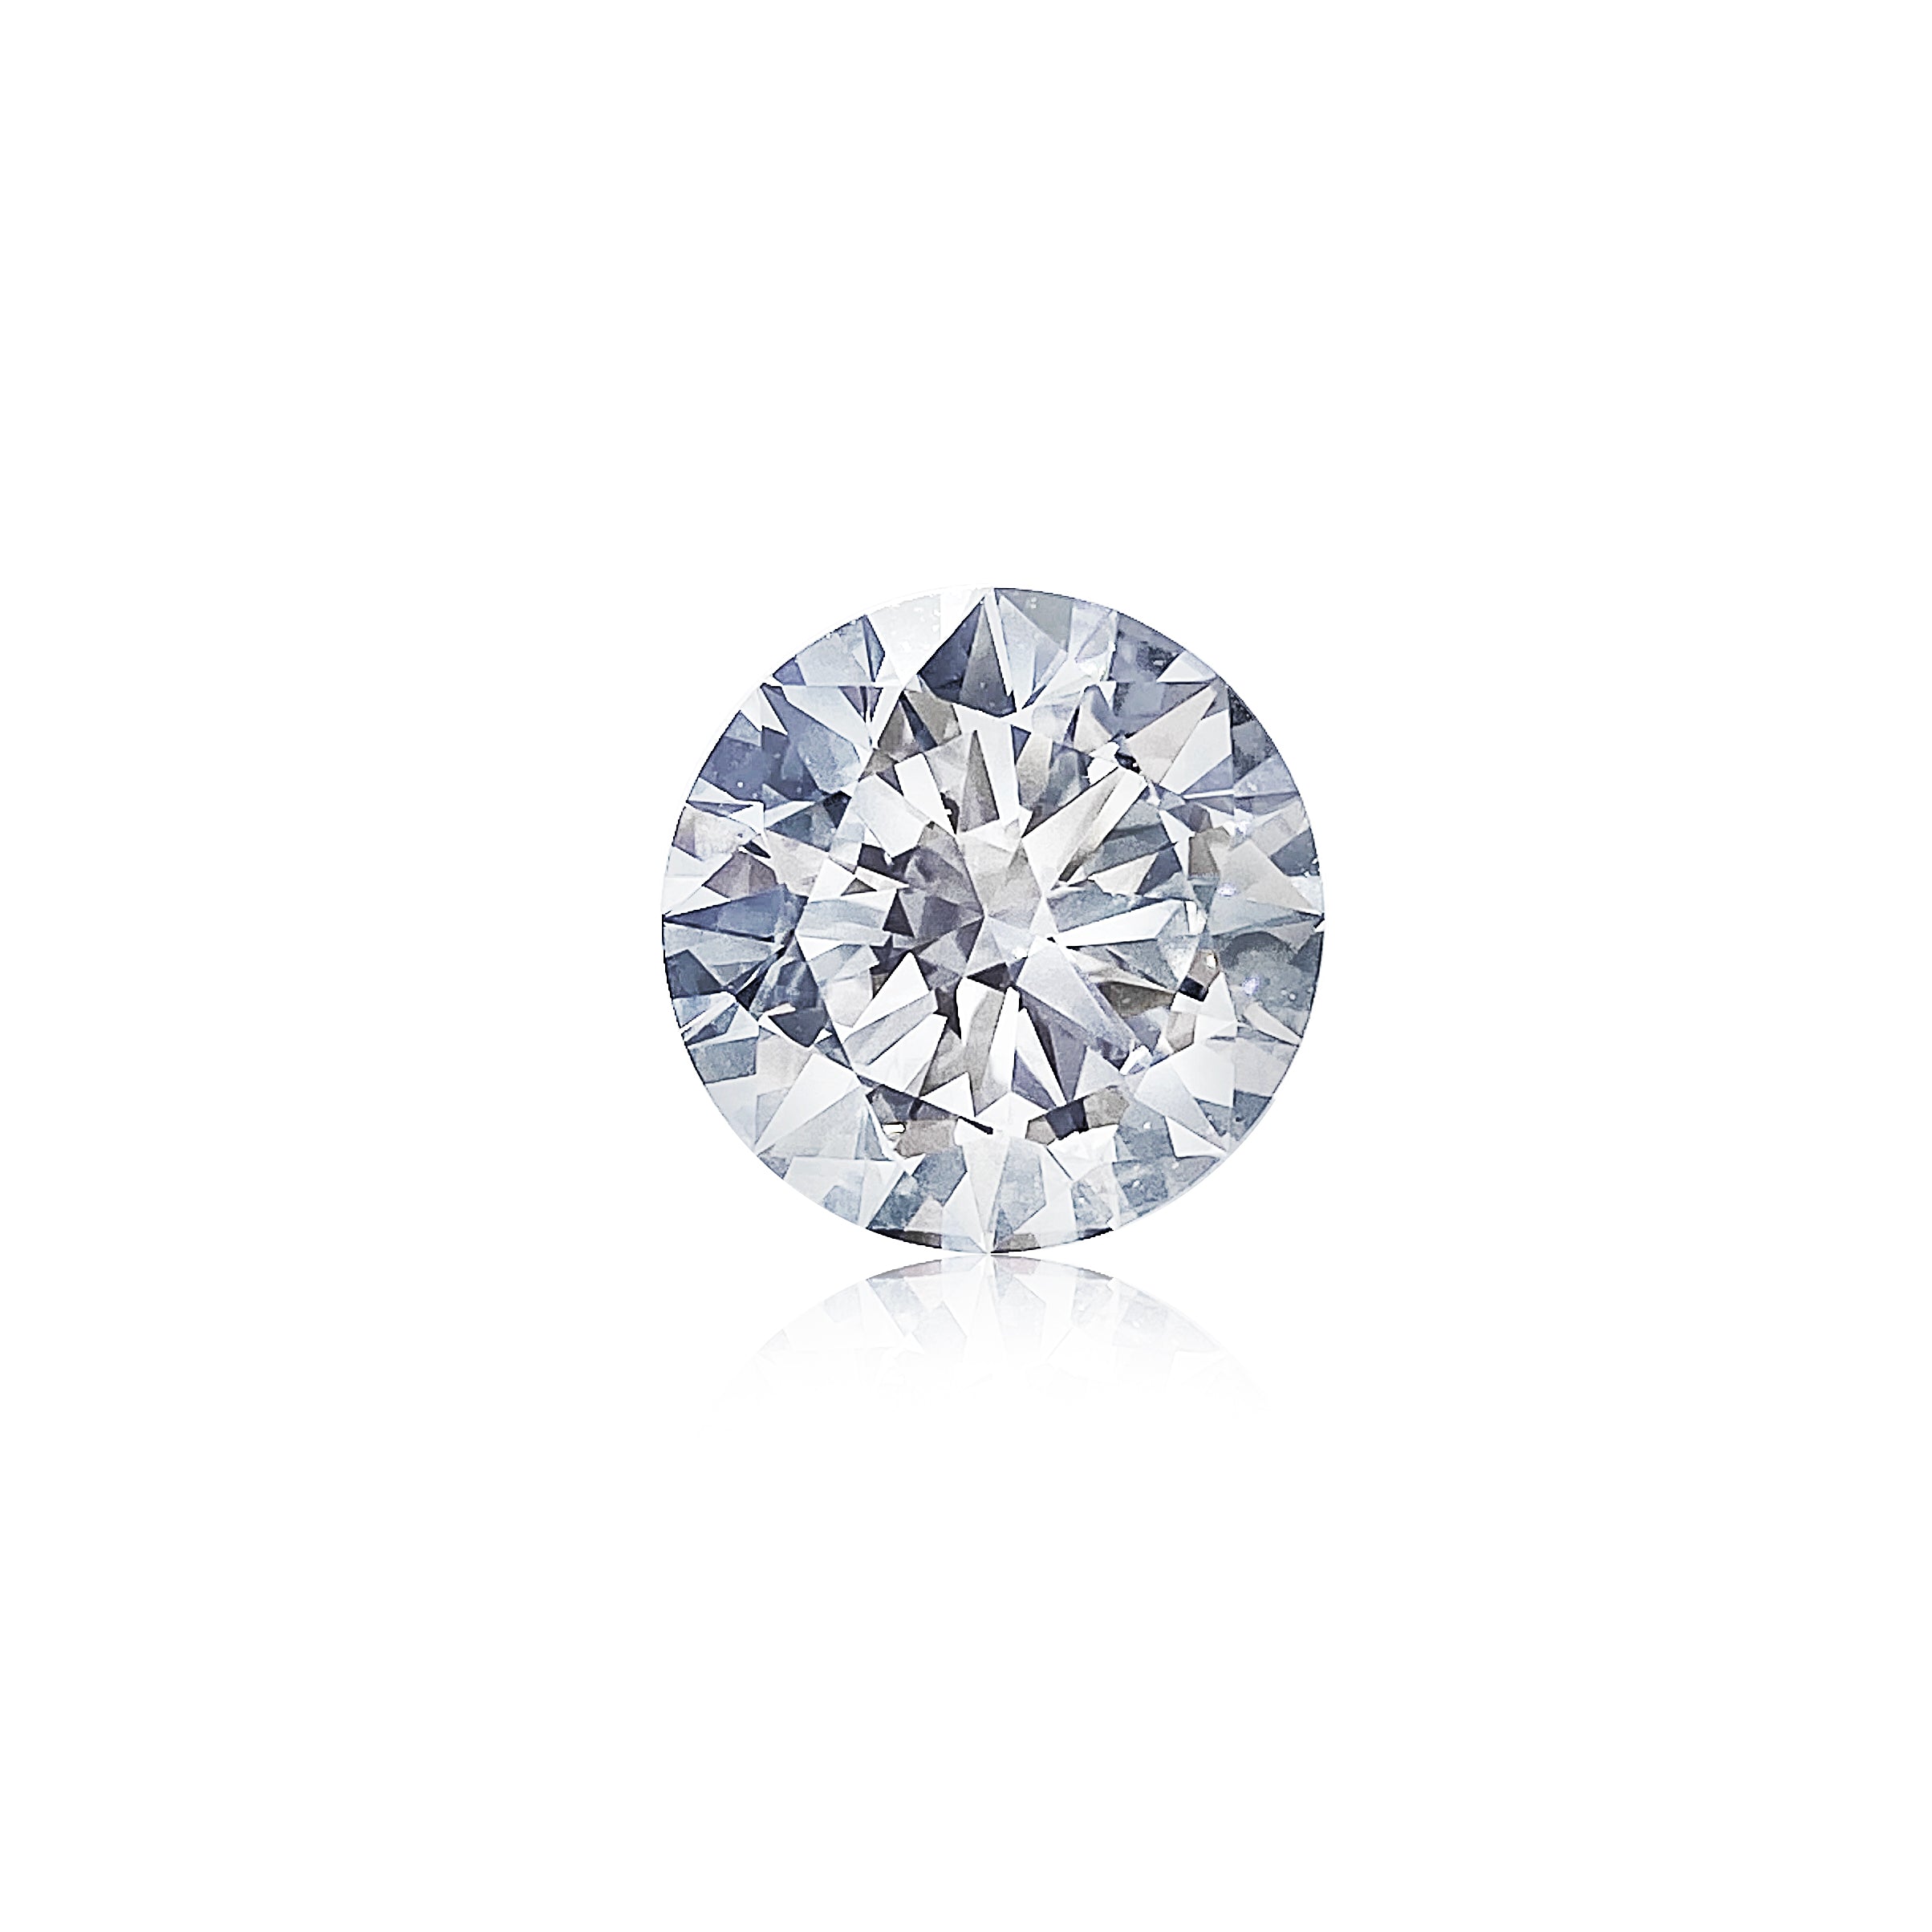 4.90 Carat D Flawless Round Brilliant Diamond (GIA)